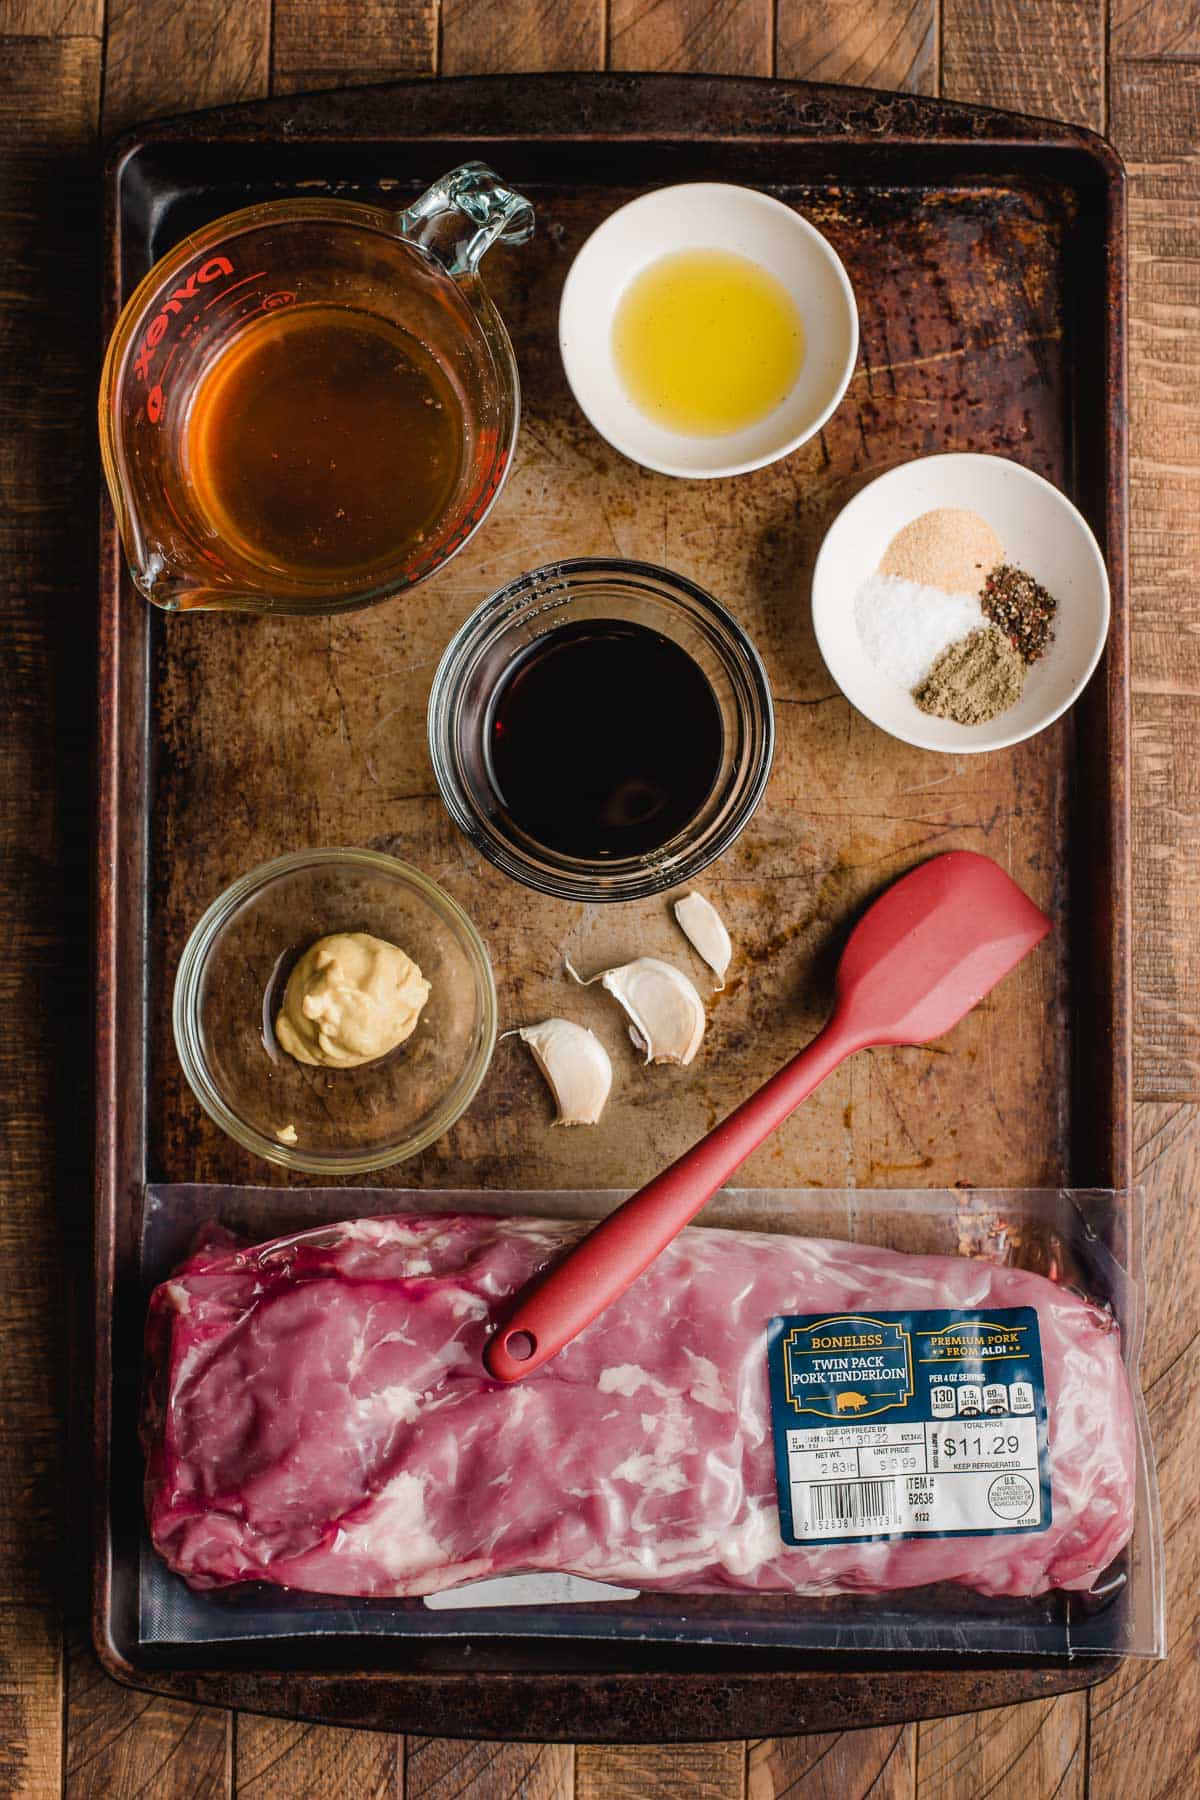 Ingredients for making a honey garlic pork tenderloin.